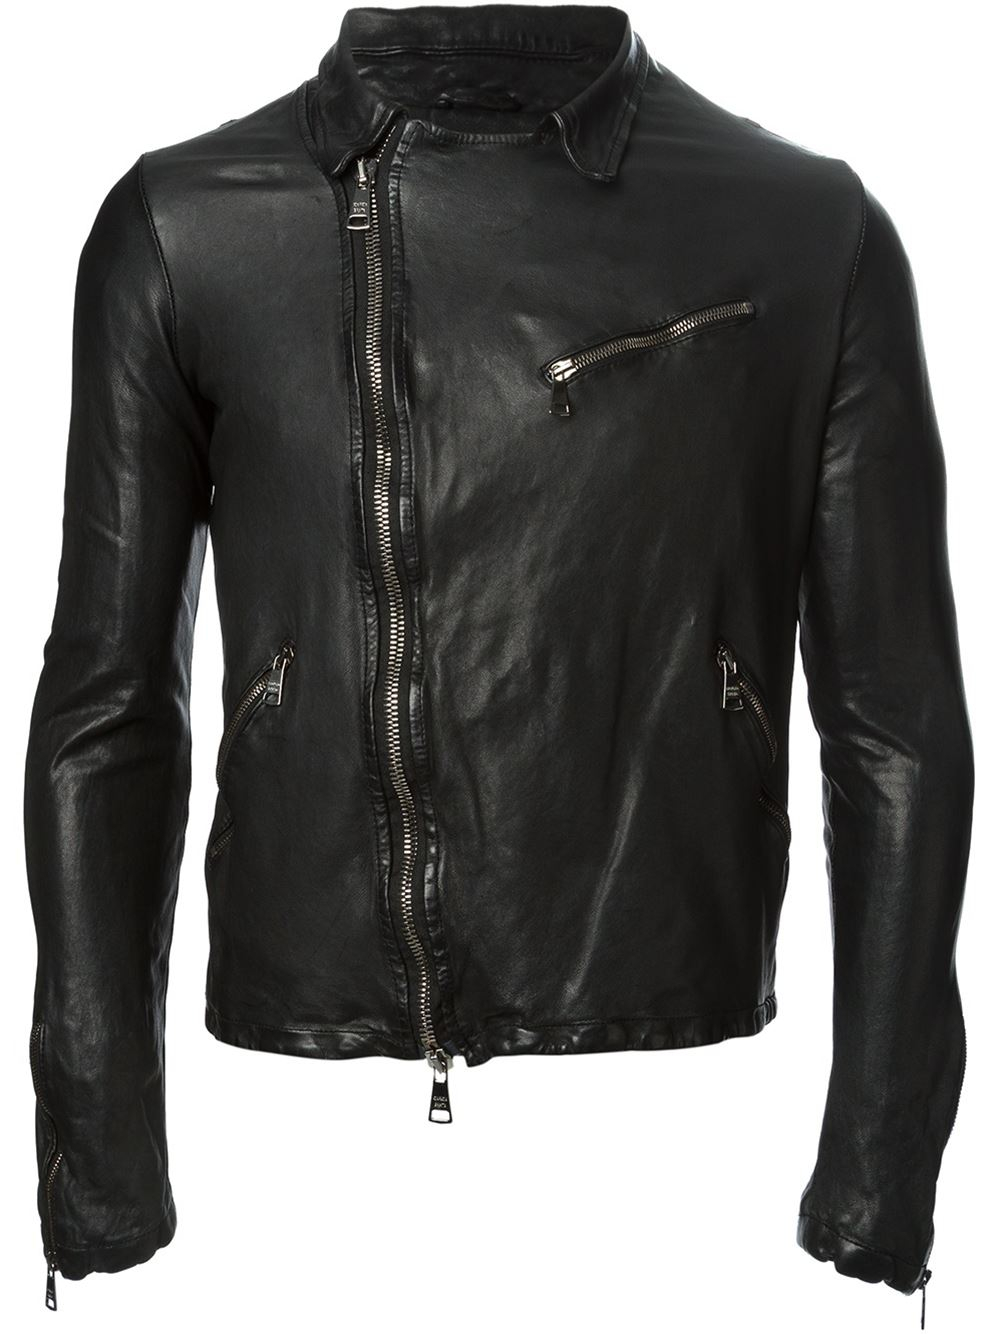 Giorgio Brato Biker Jacket in Black for Men - Lyst